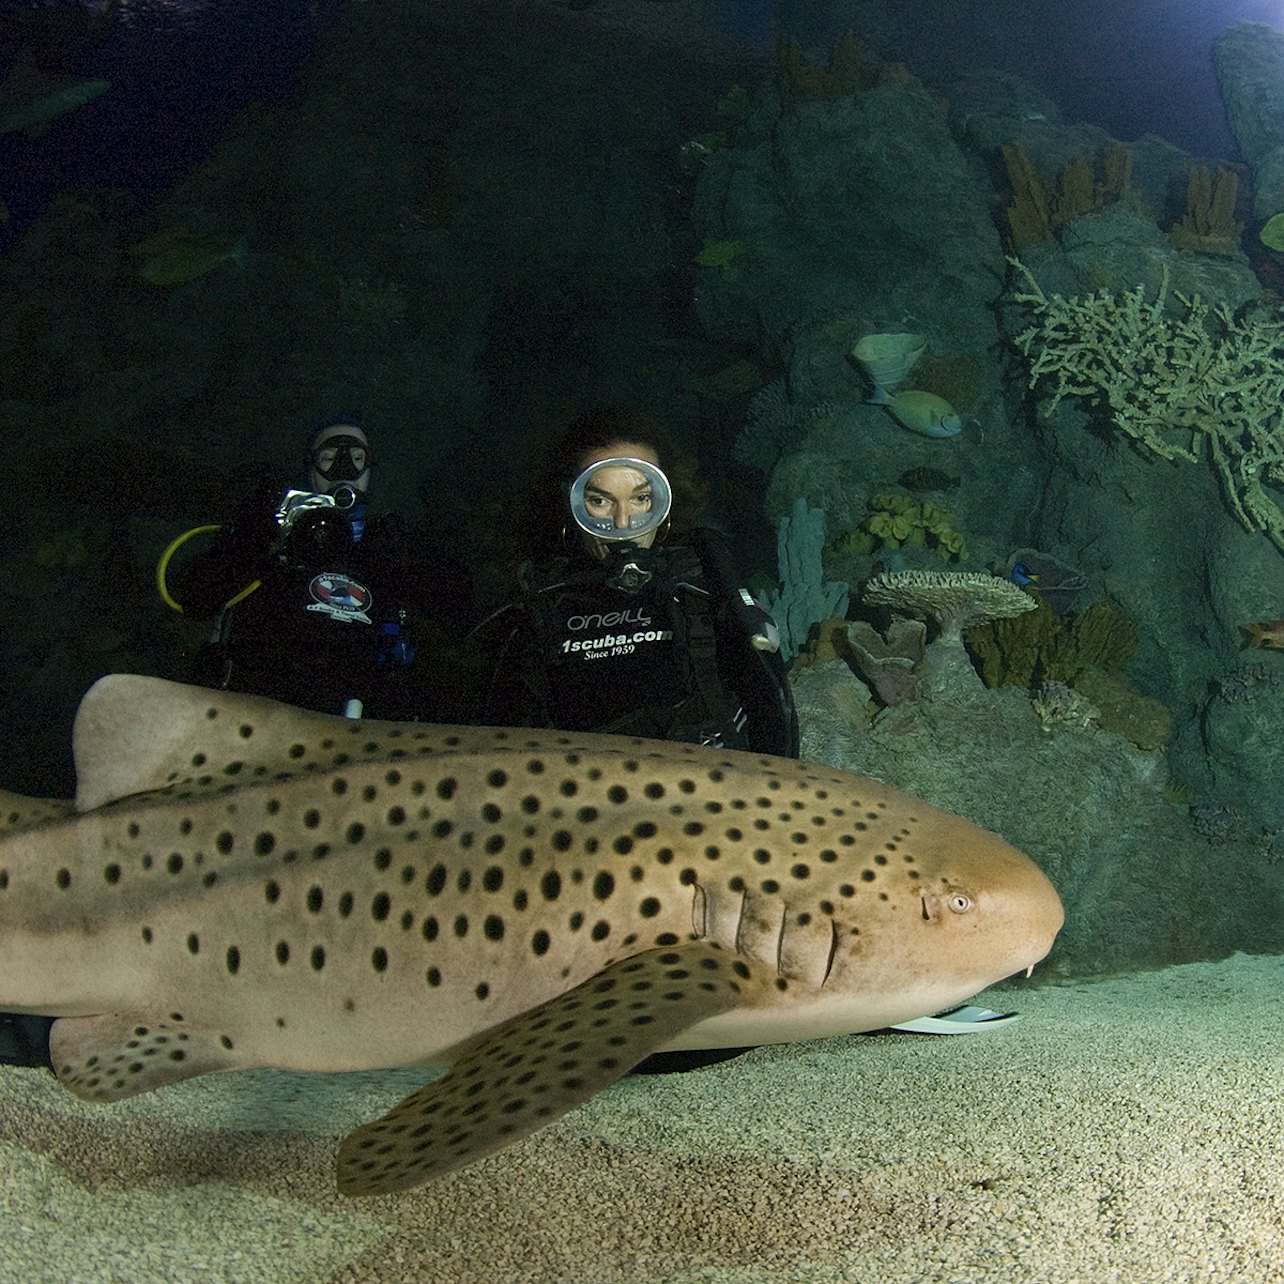 Downtown Aquarium Houston - Accommodations in Houston